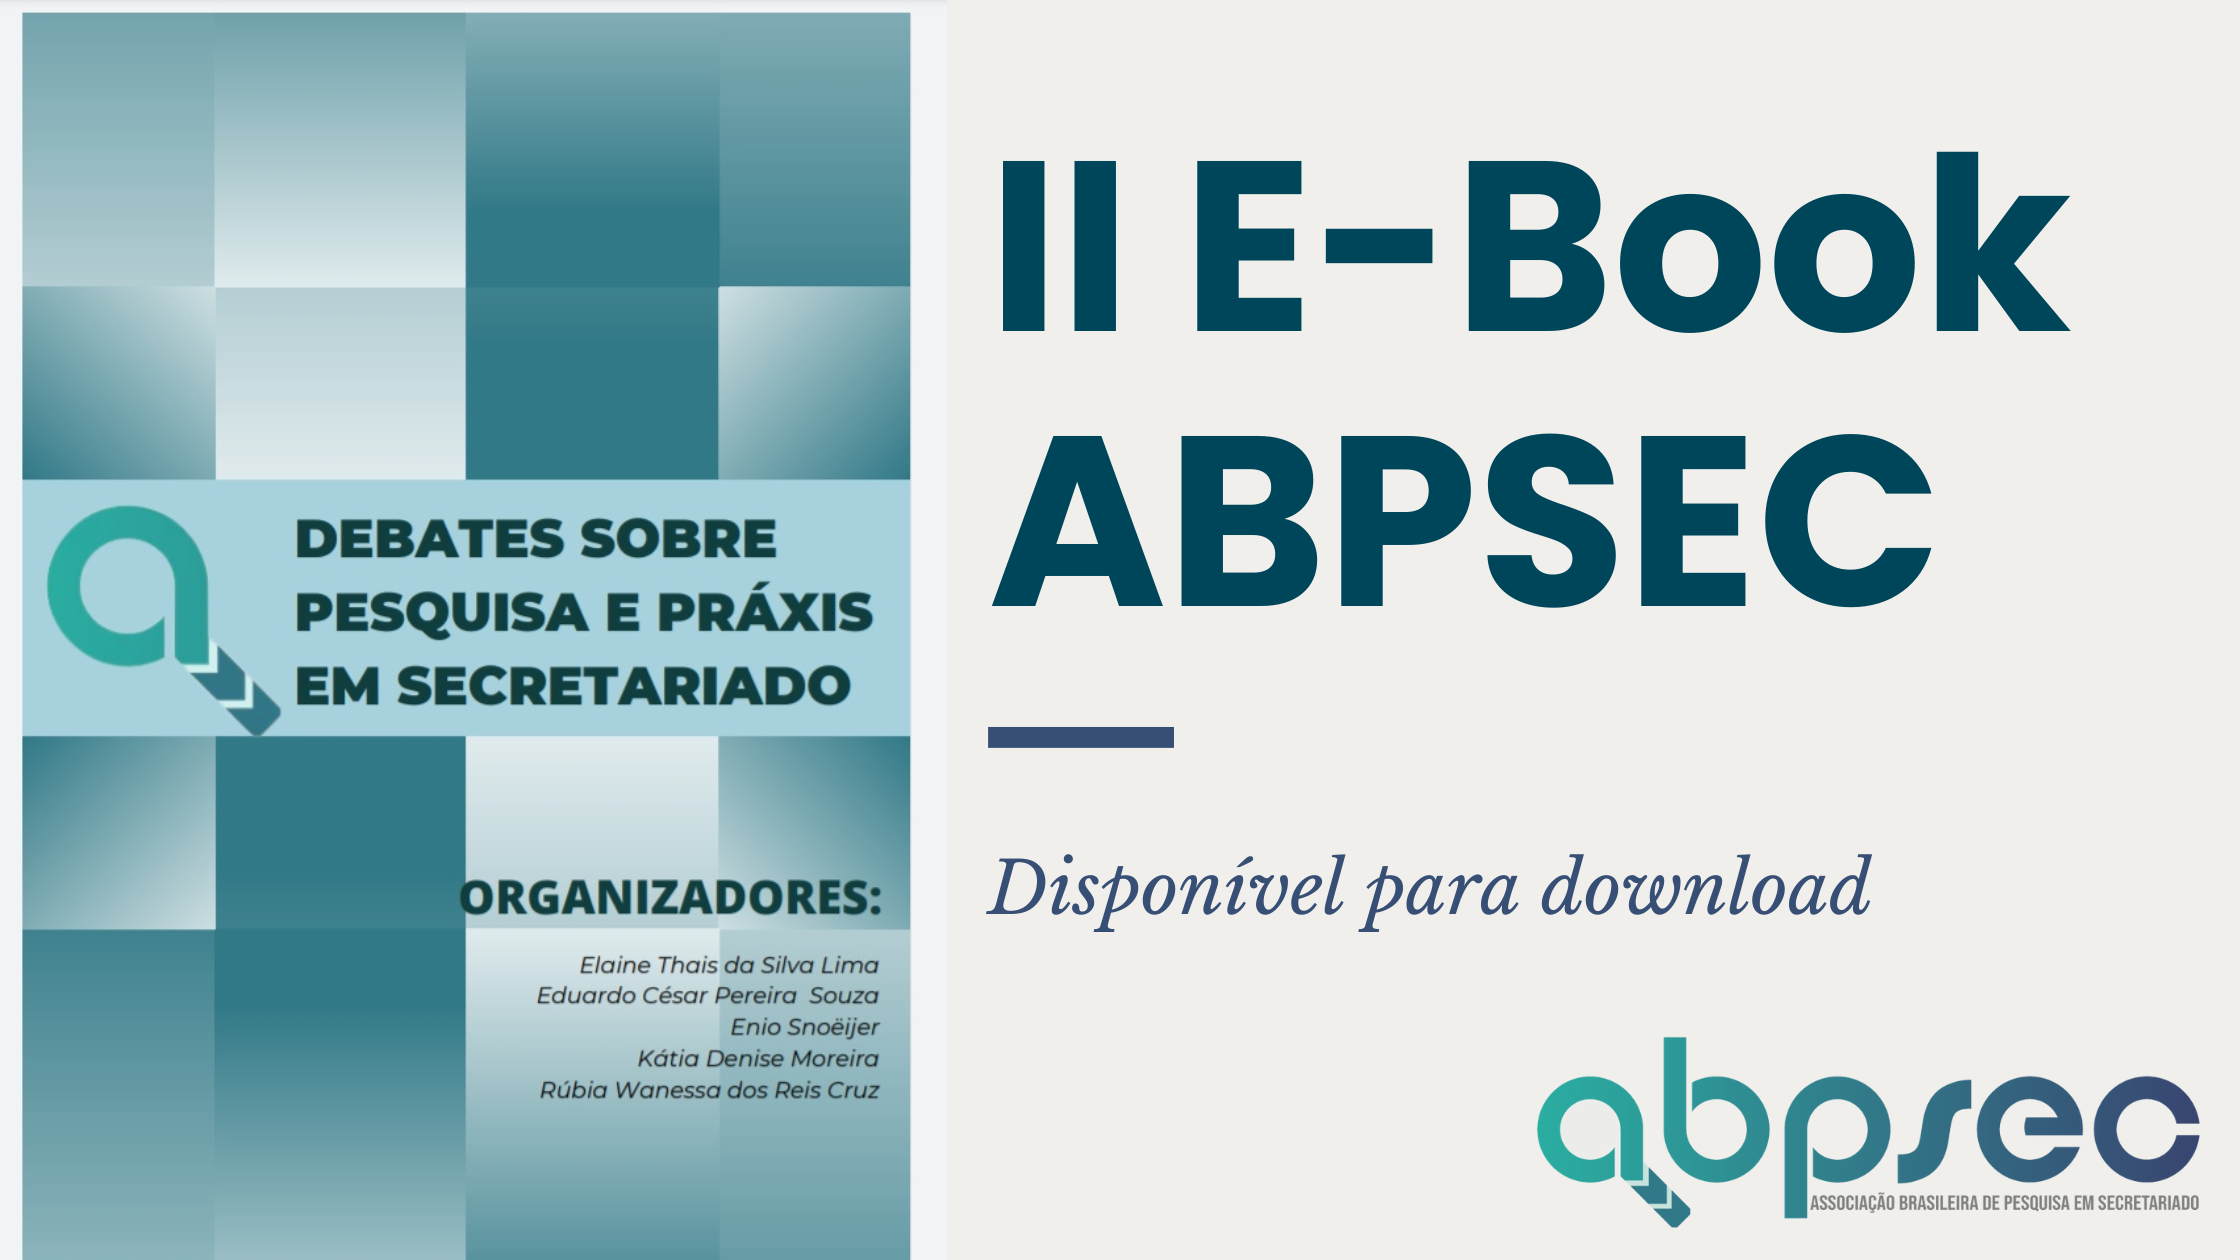 II E-Book ABPSEC